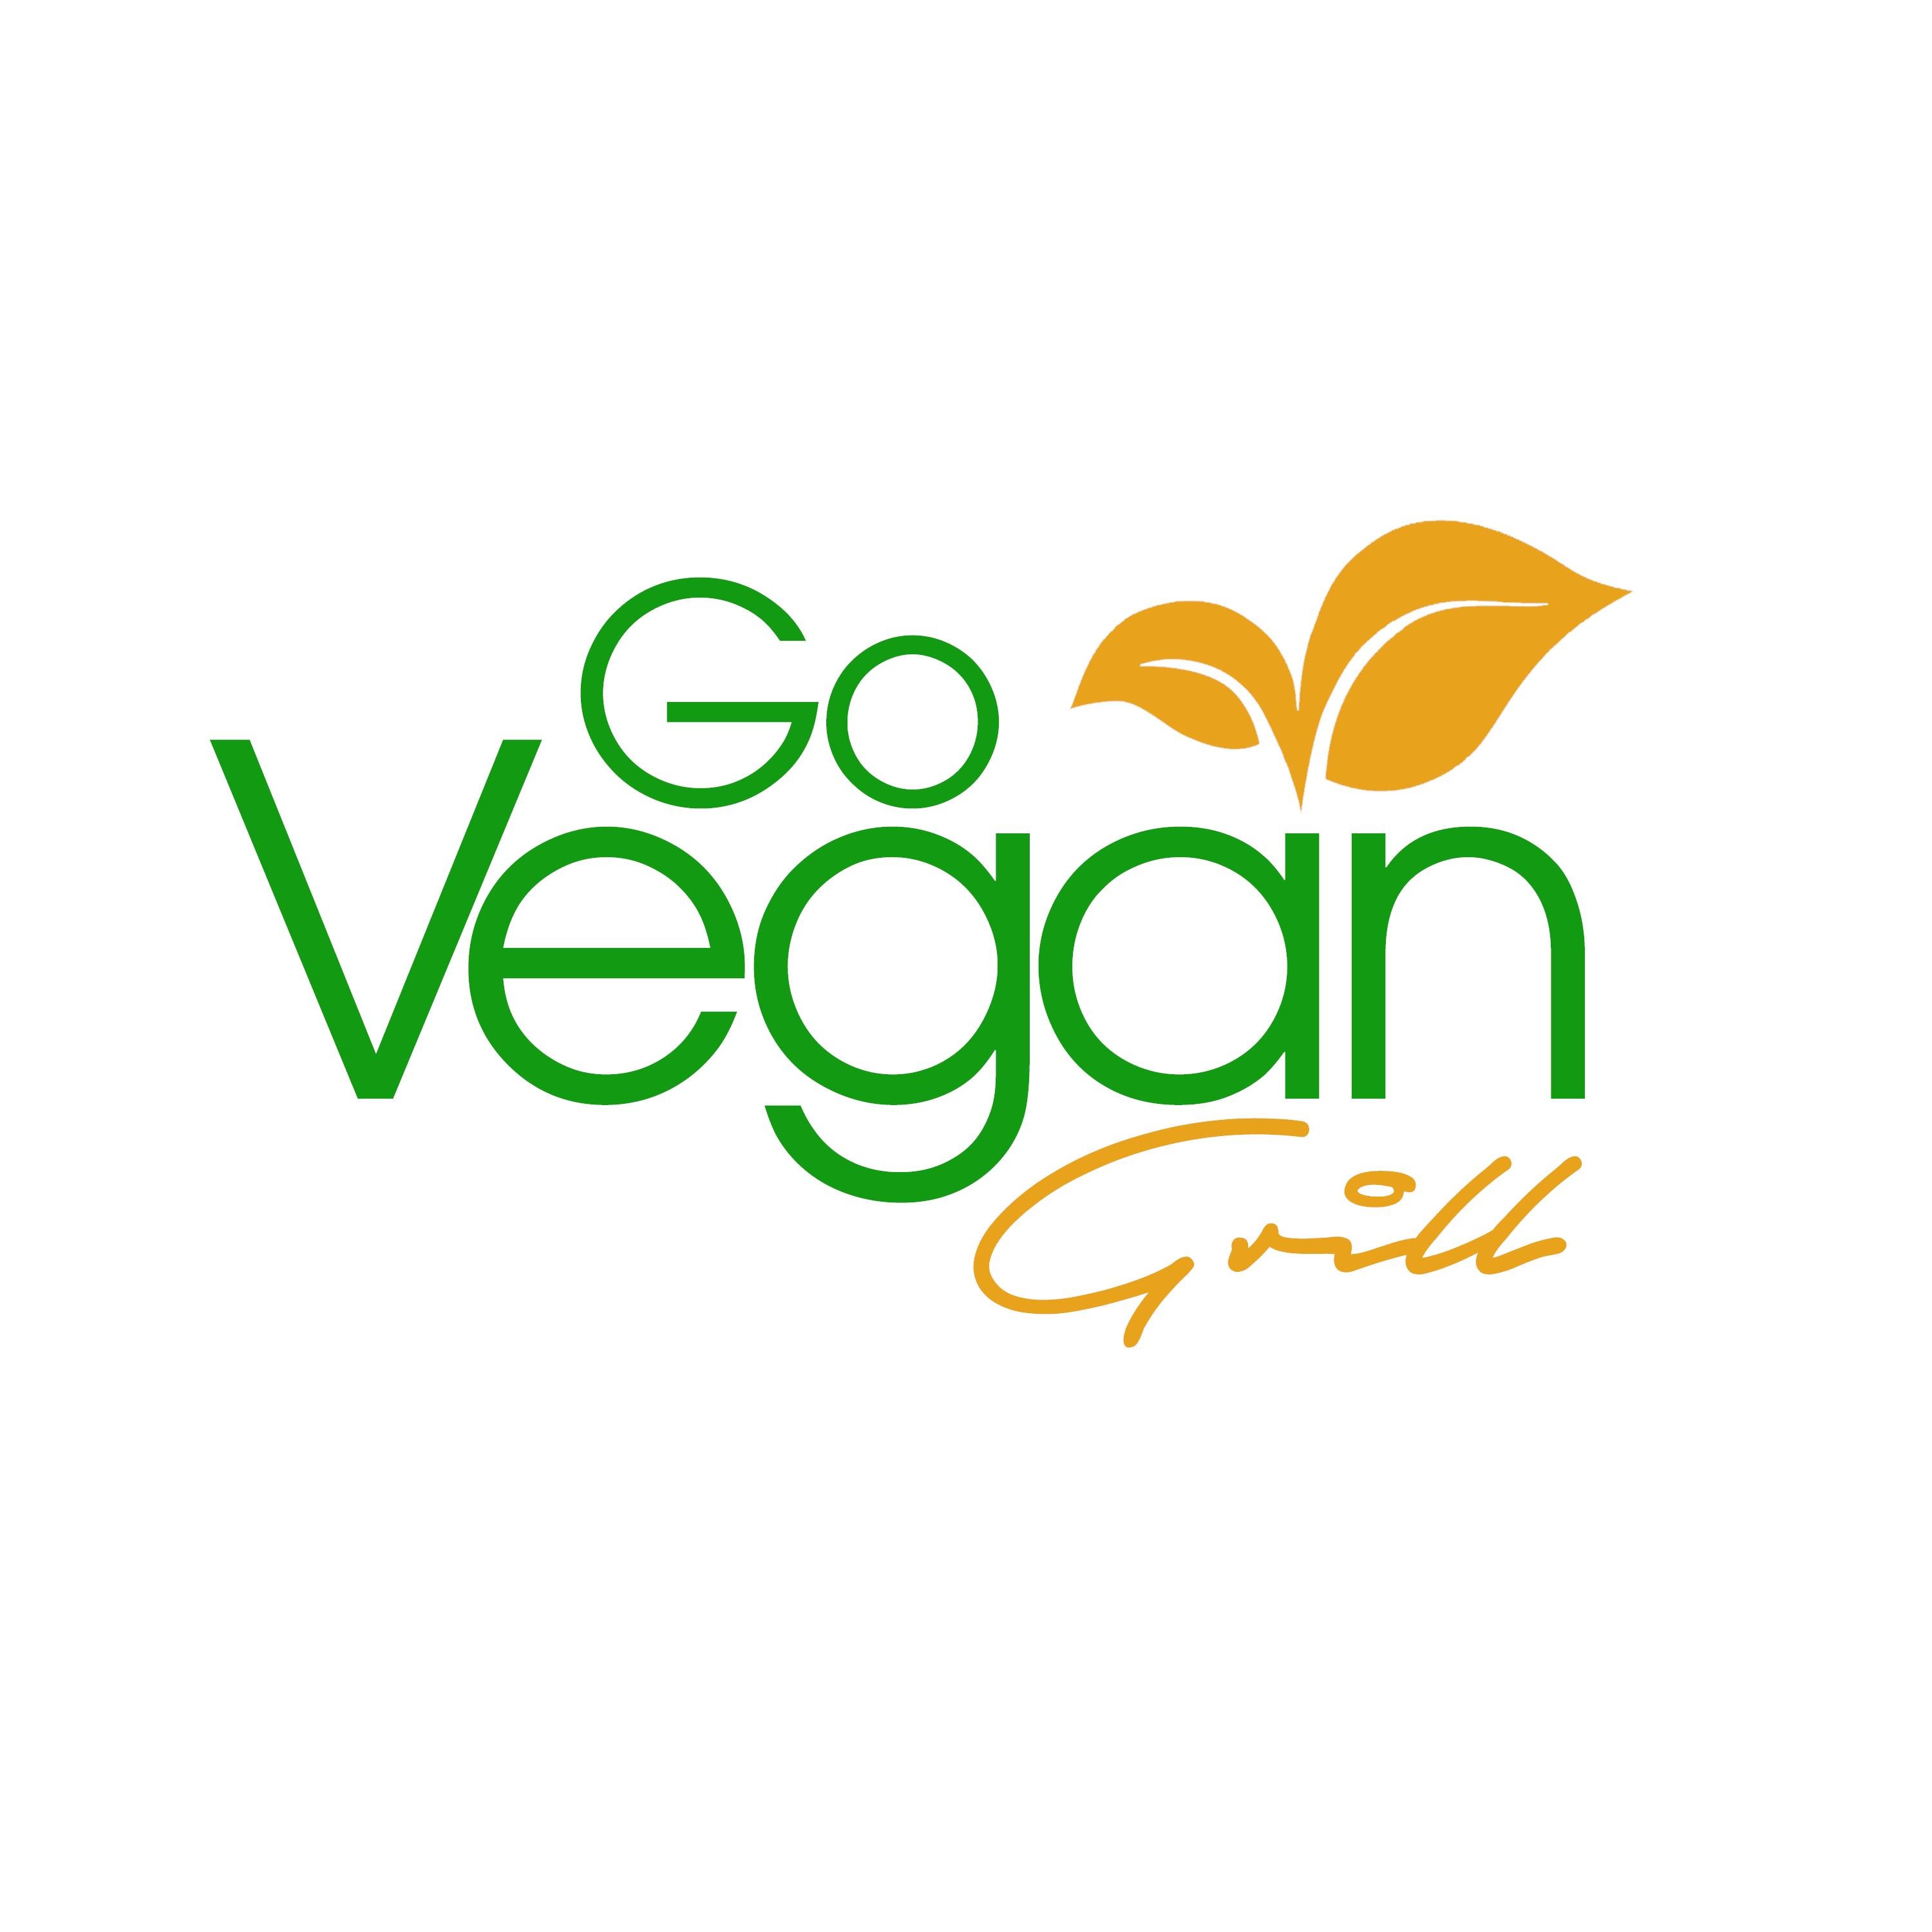 Best Vegan Restaurant in Atlanta!
404-254-0728